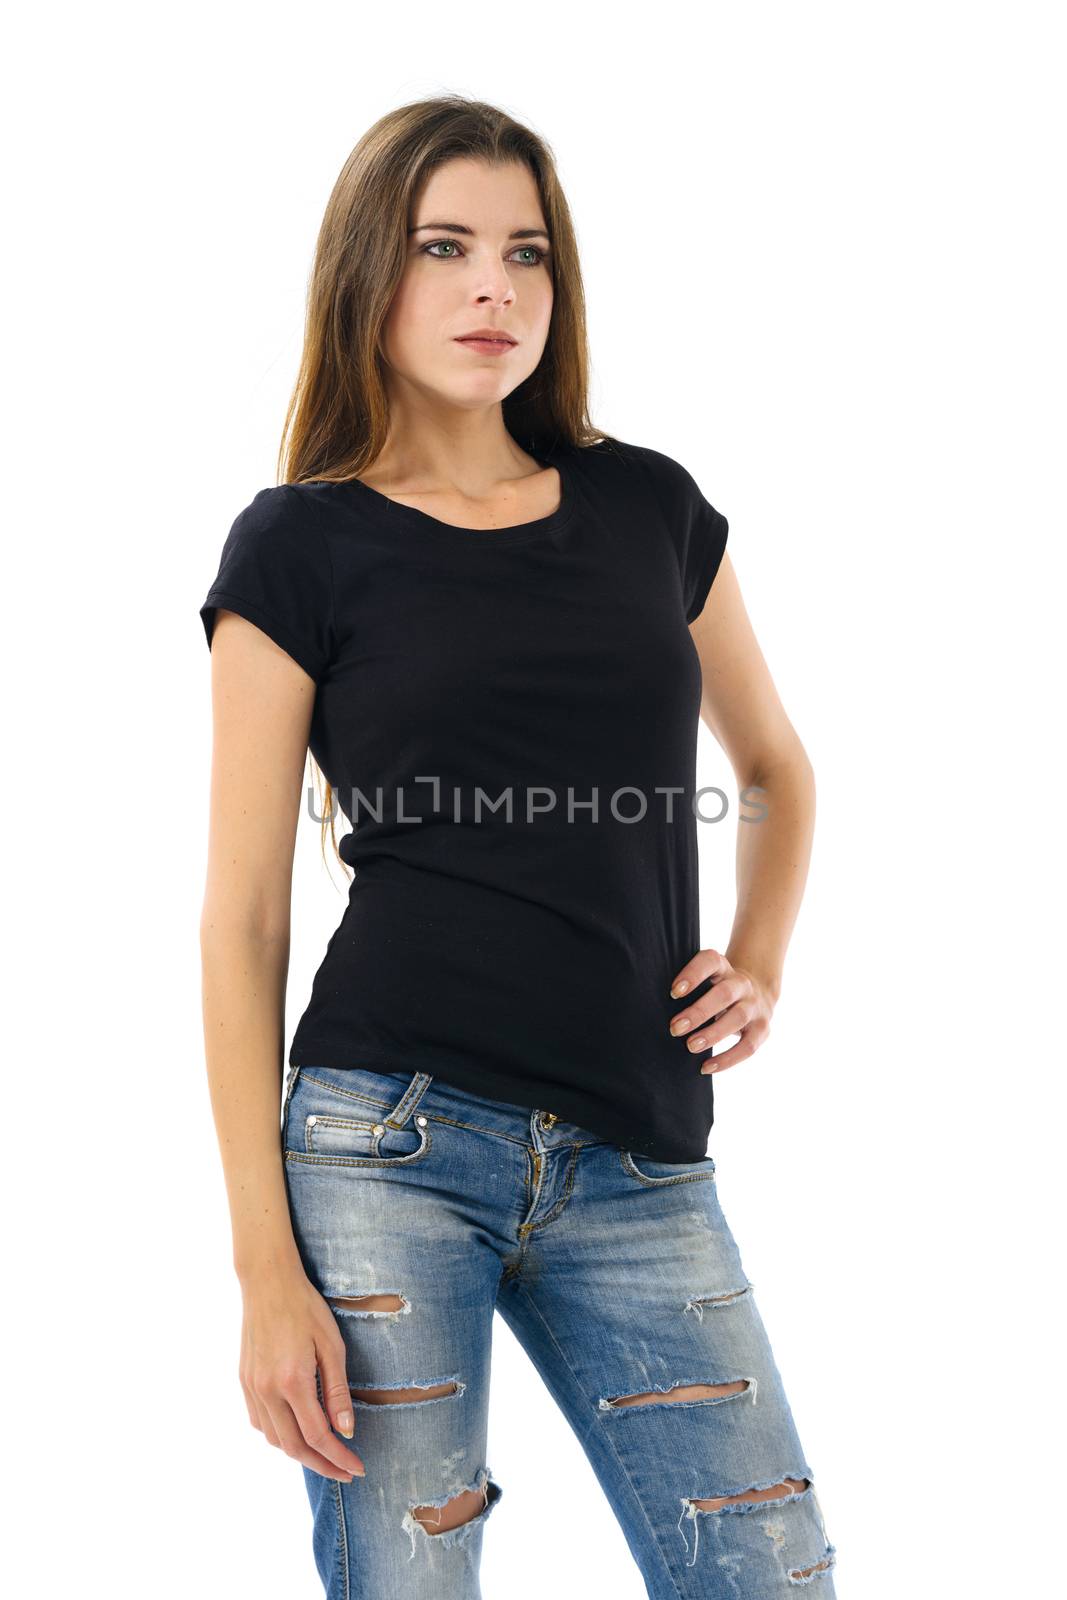 Sexy brunette wearing blank black shirt by sumners